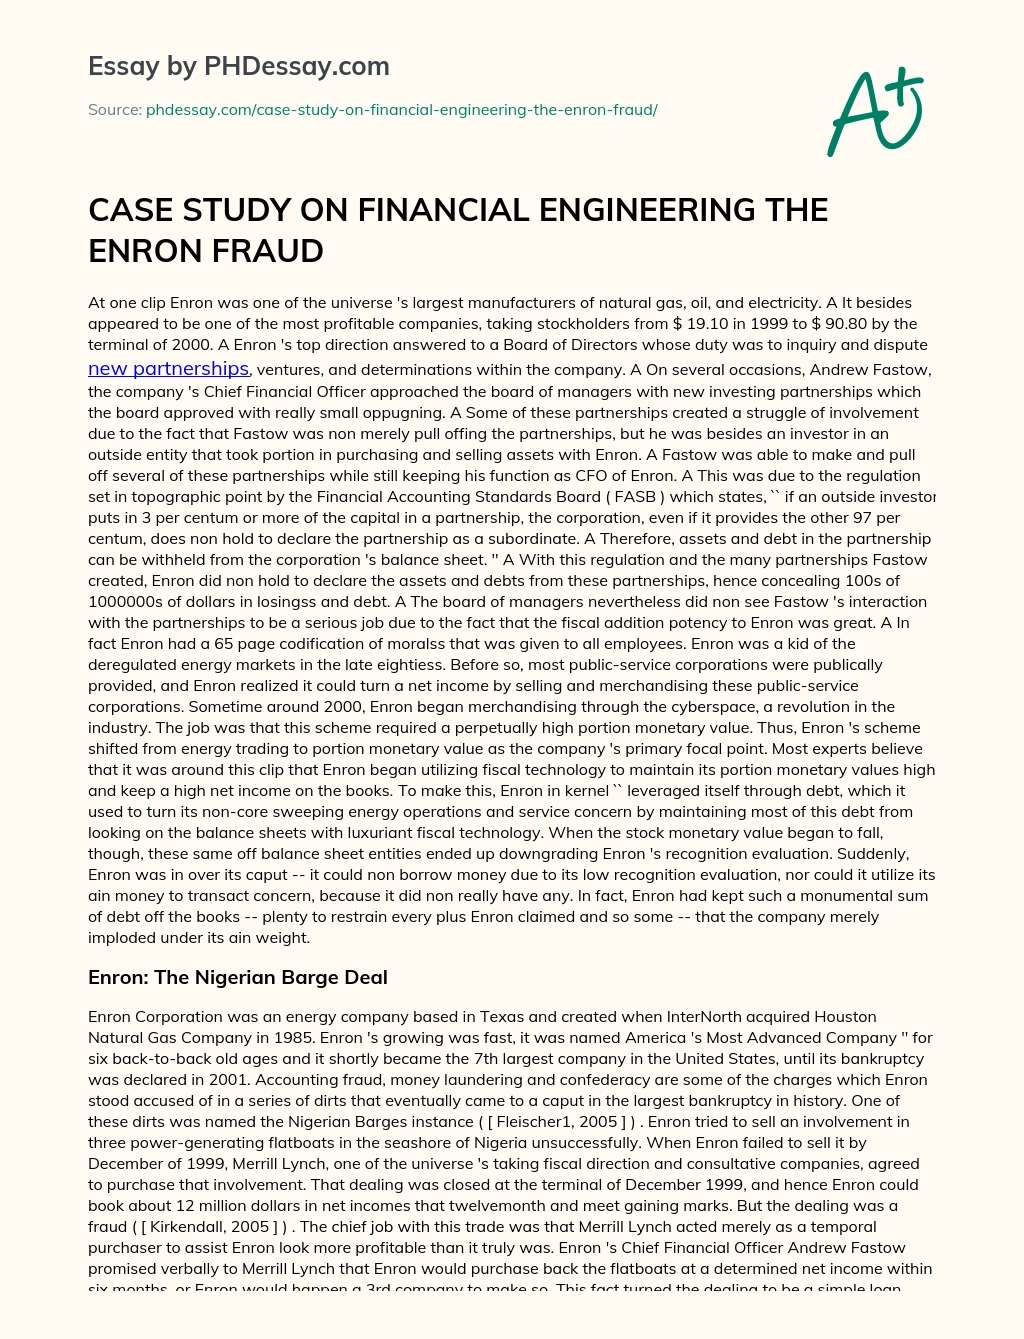 CASE STUDY ON FINANCIAL ENGINEERING THE ENRON FRAUD essay